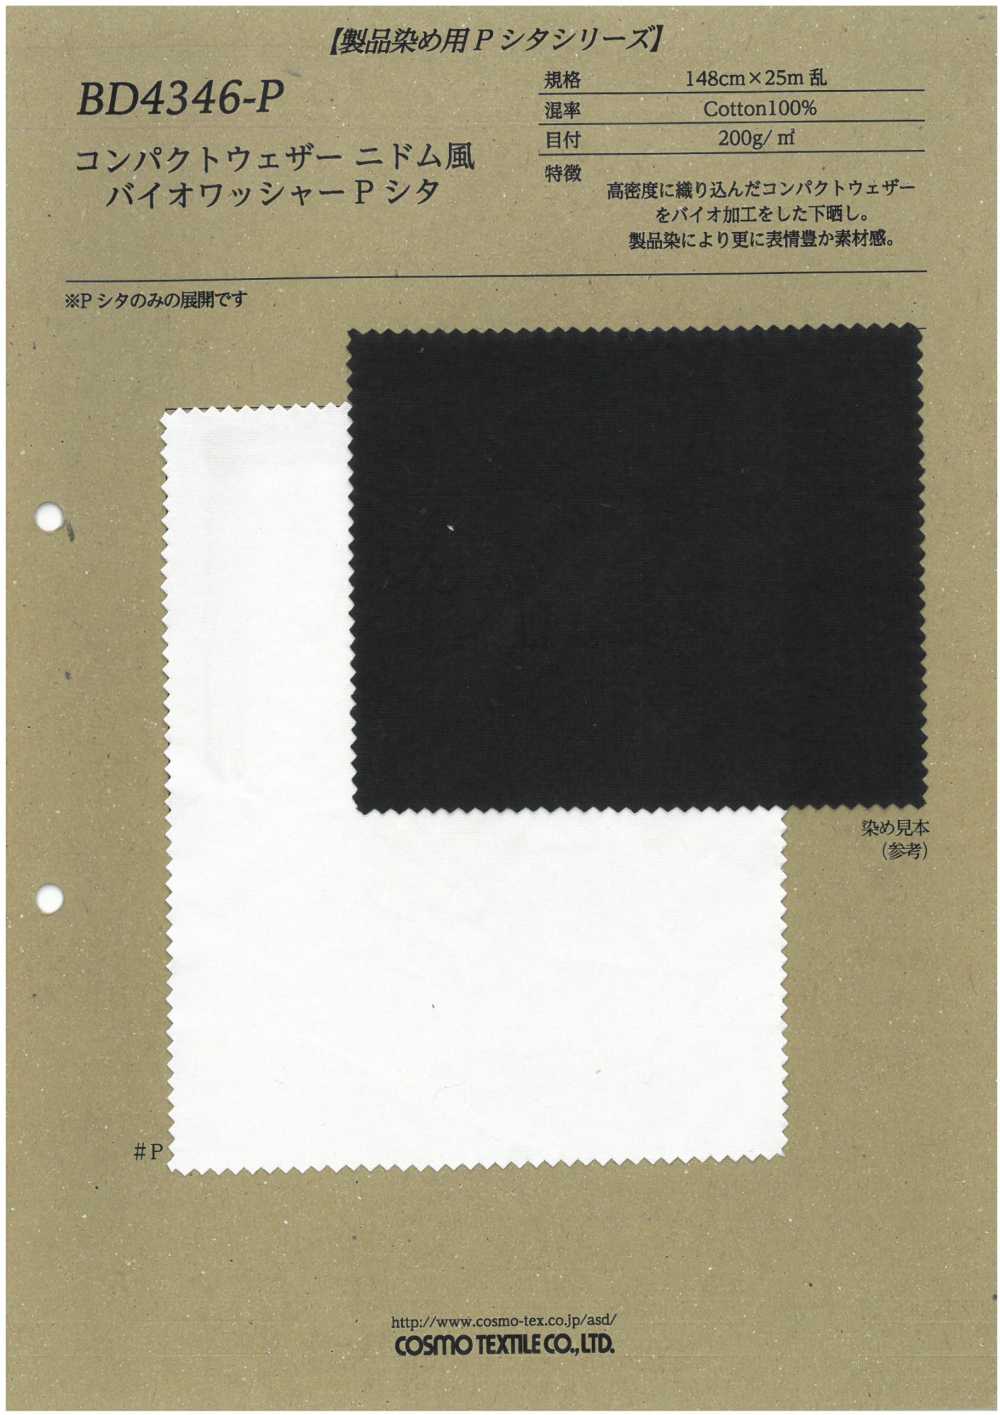 BD4346-P Compact Weather Cloth Nidom Style Biowasher Processing P Shita[Textile / Fabric] COSMO TEXTILE